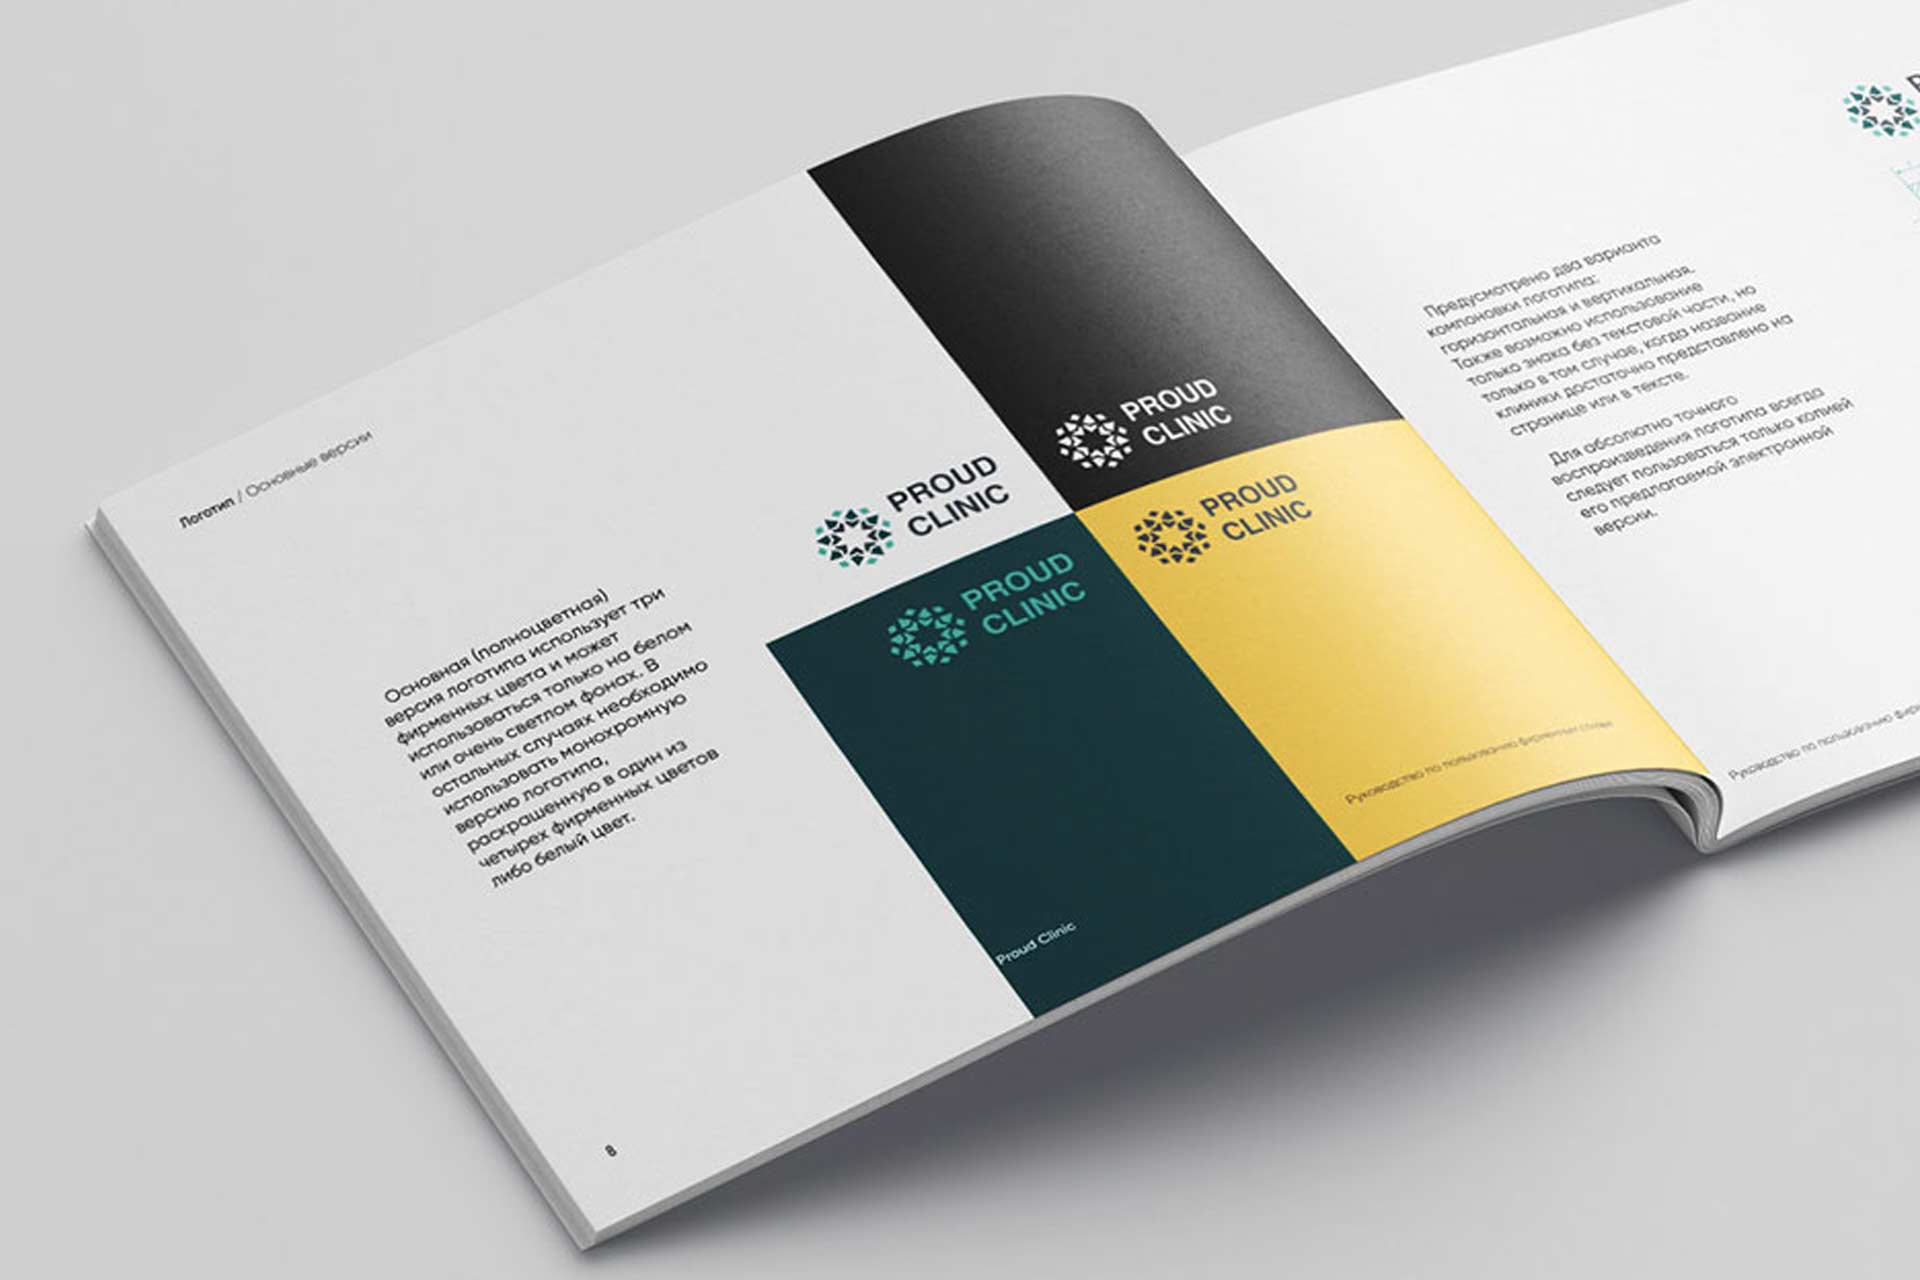 Brand book de marque : graphisme, illustration, webdesign et direction artistique.